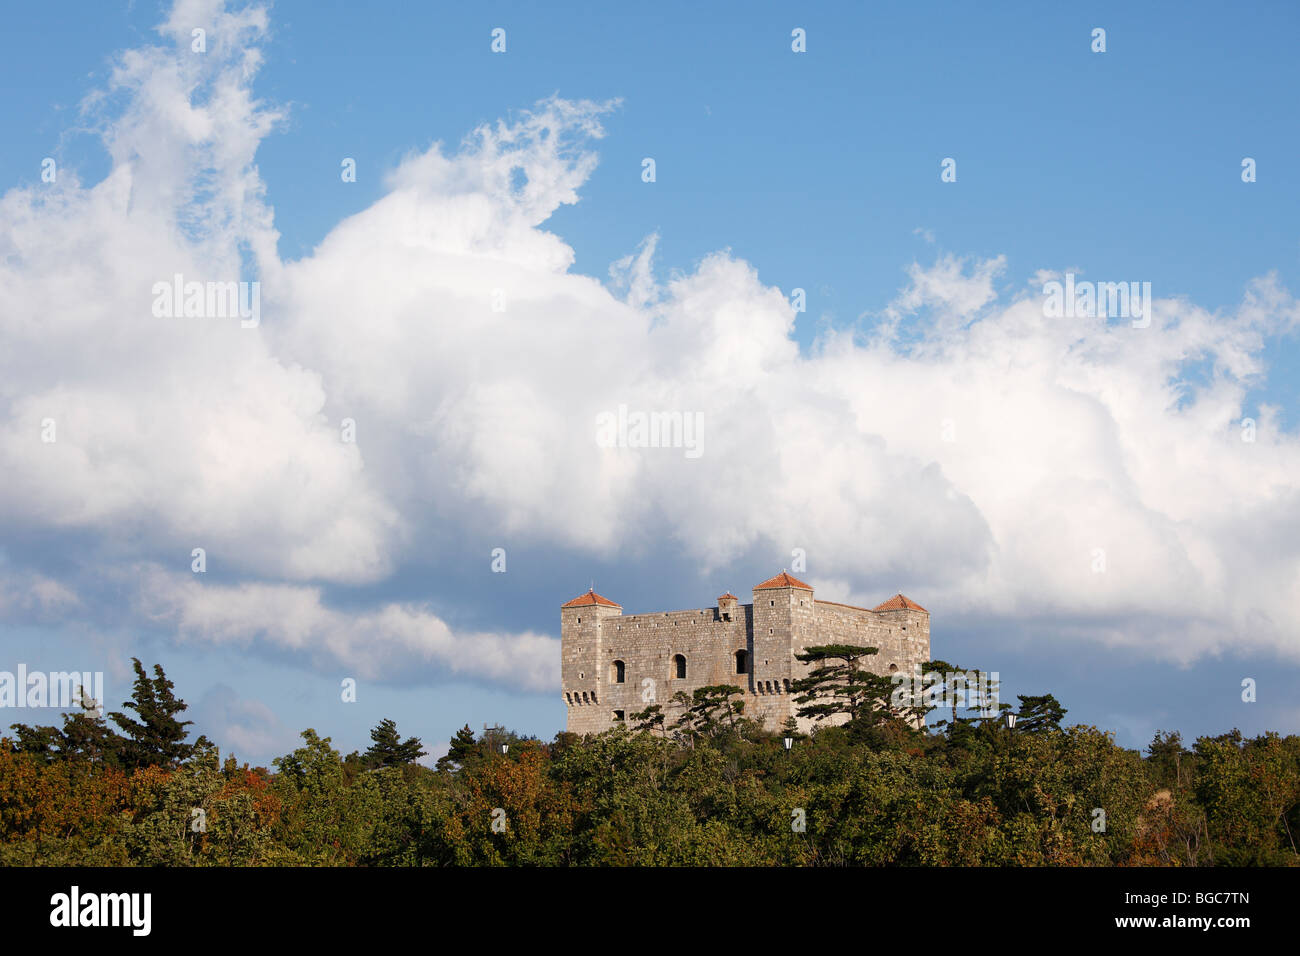 Nehaj Castle, Uskoci Tower, Senj, Adriatic Sea, Croatia, Europe Stock Photo